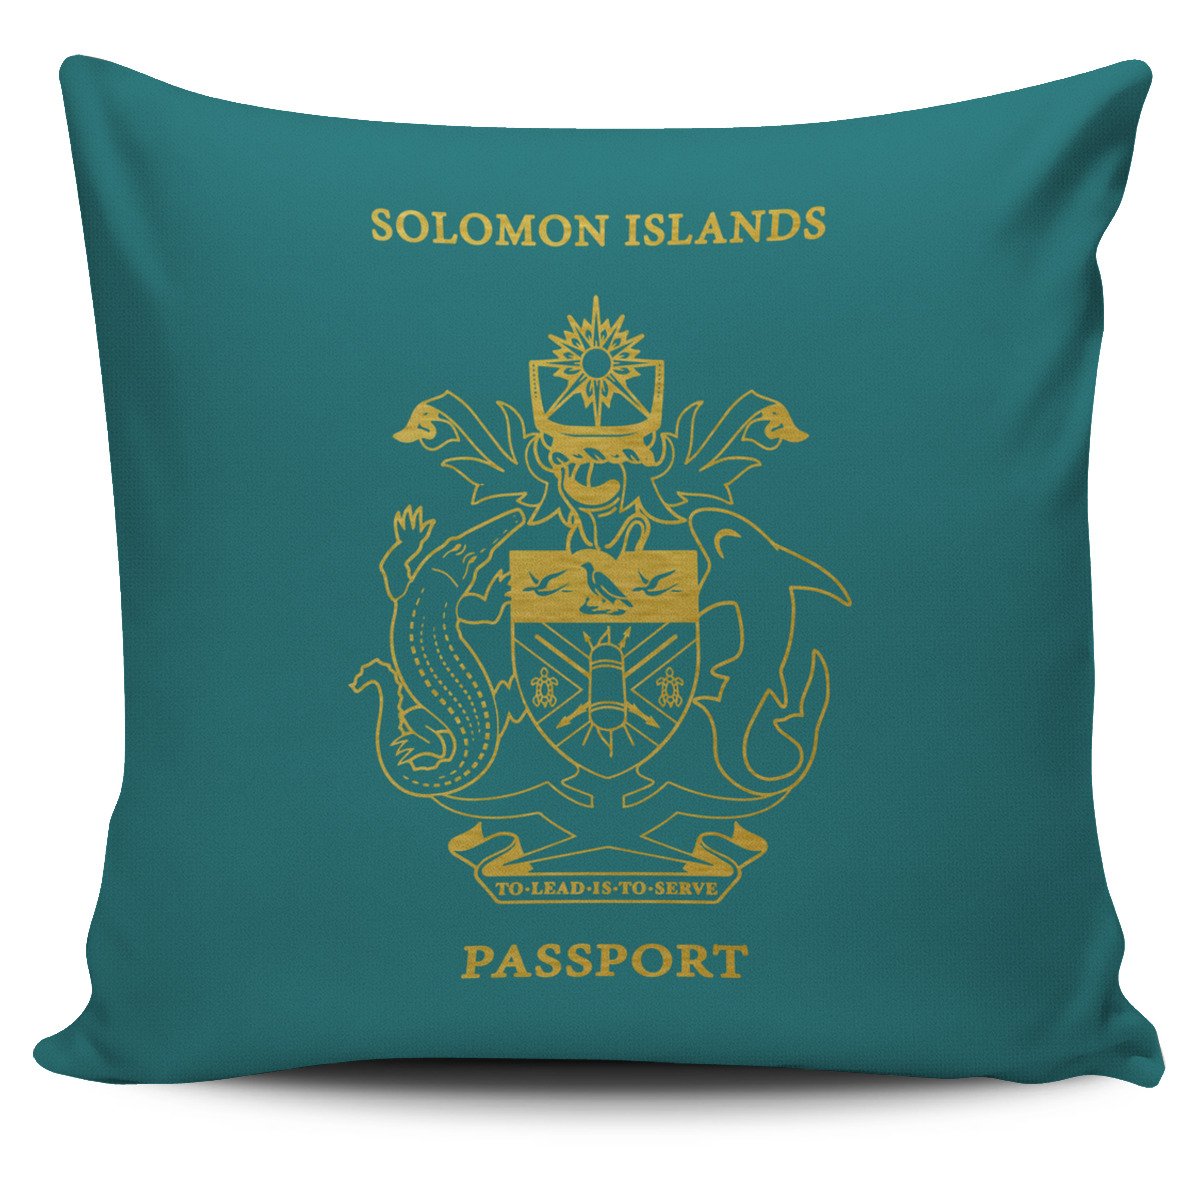 Solomon Islands Pillow Cover - Passport Version Solomon Islands One Size Green - Polynesian Pride